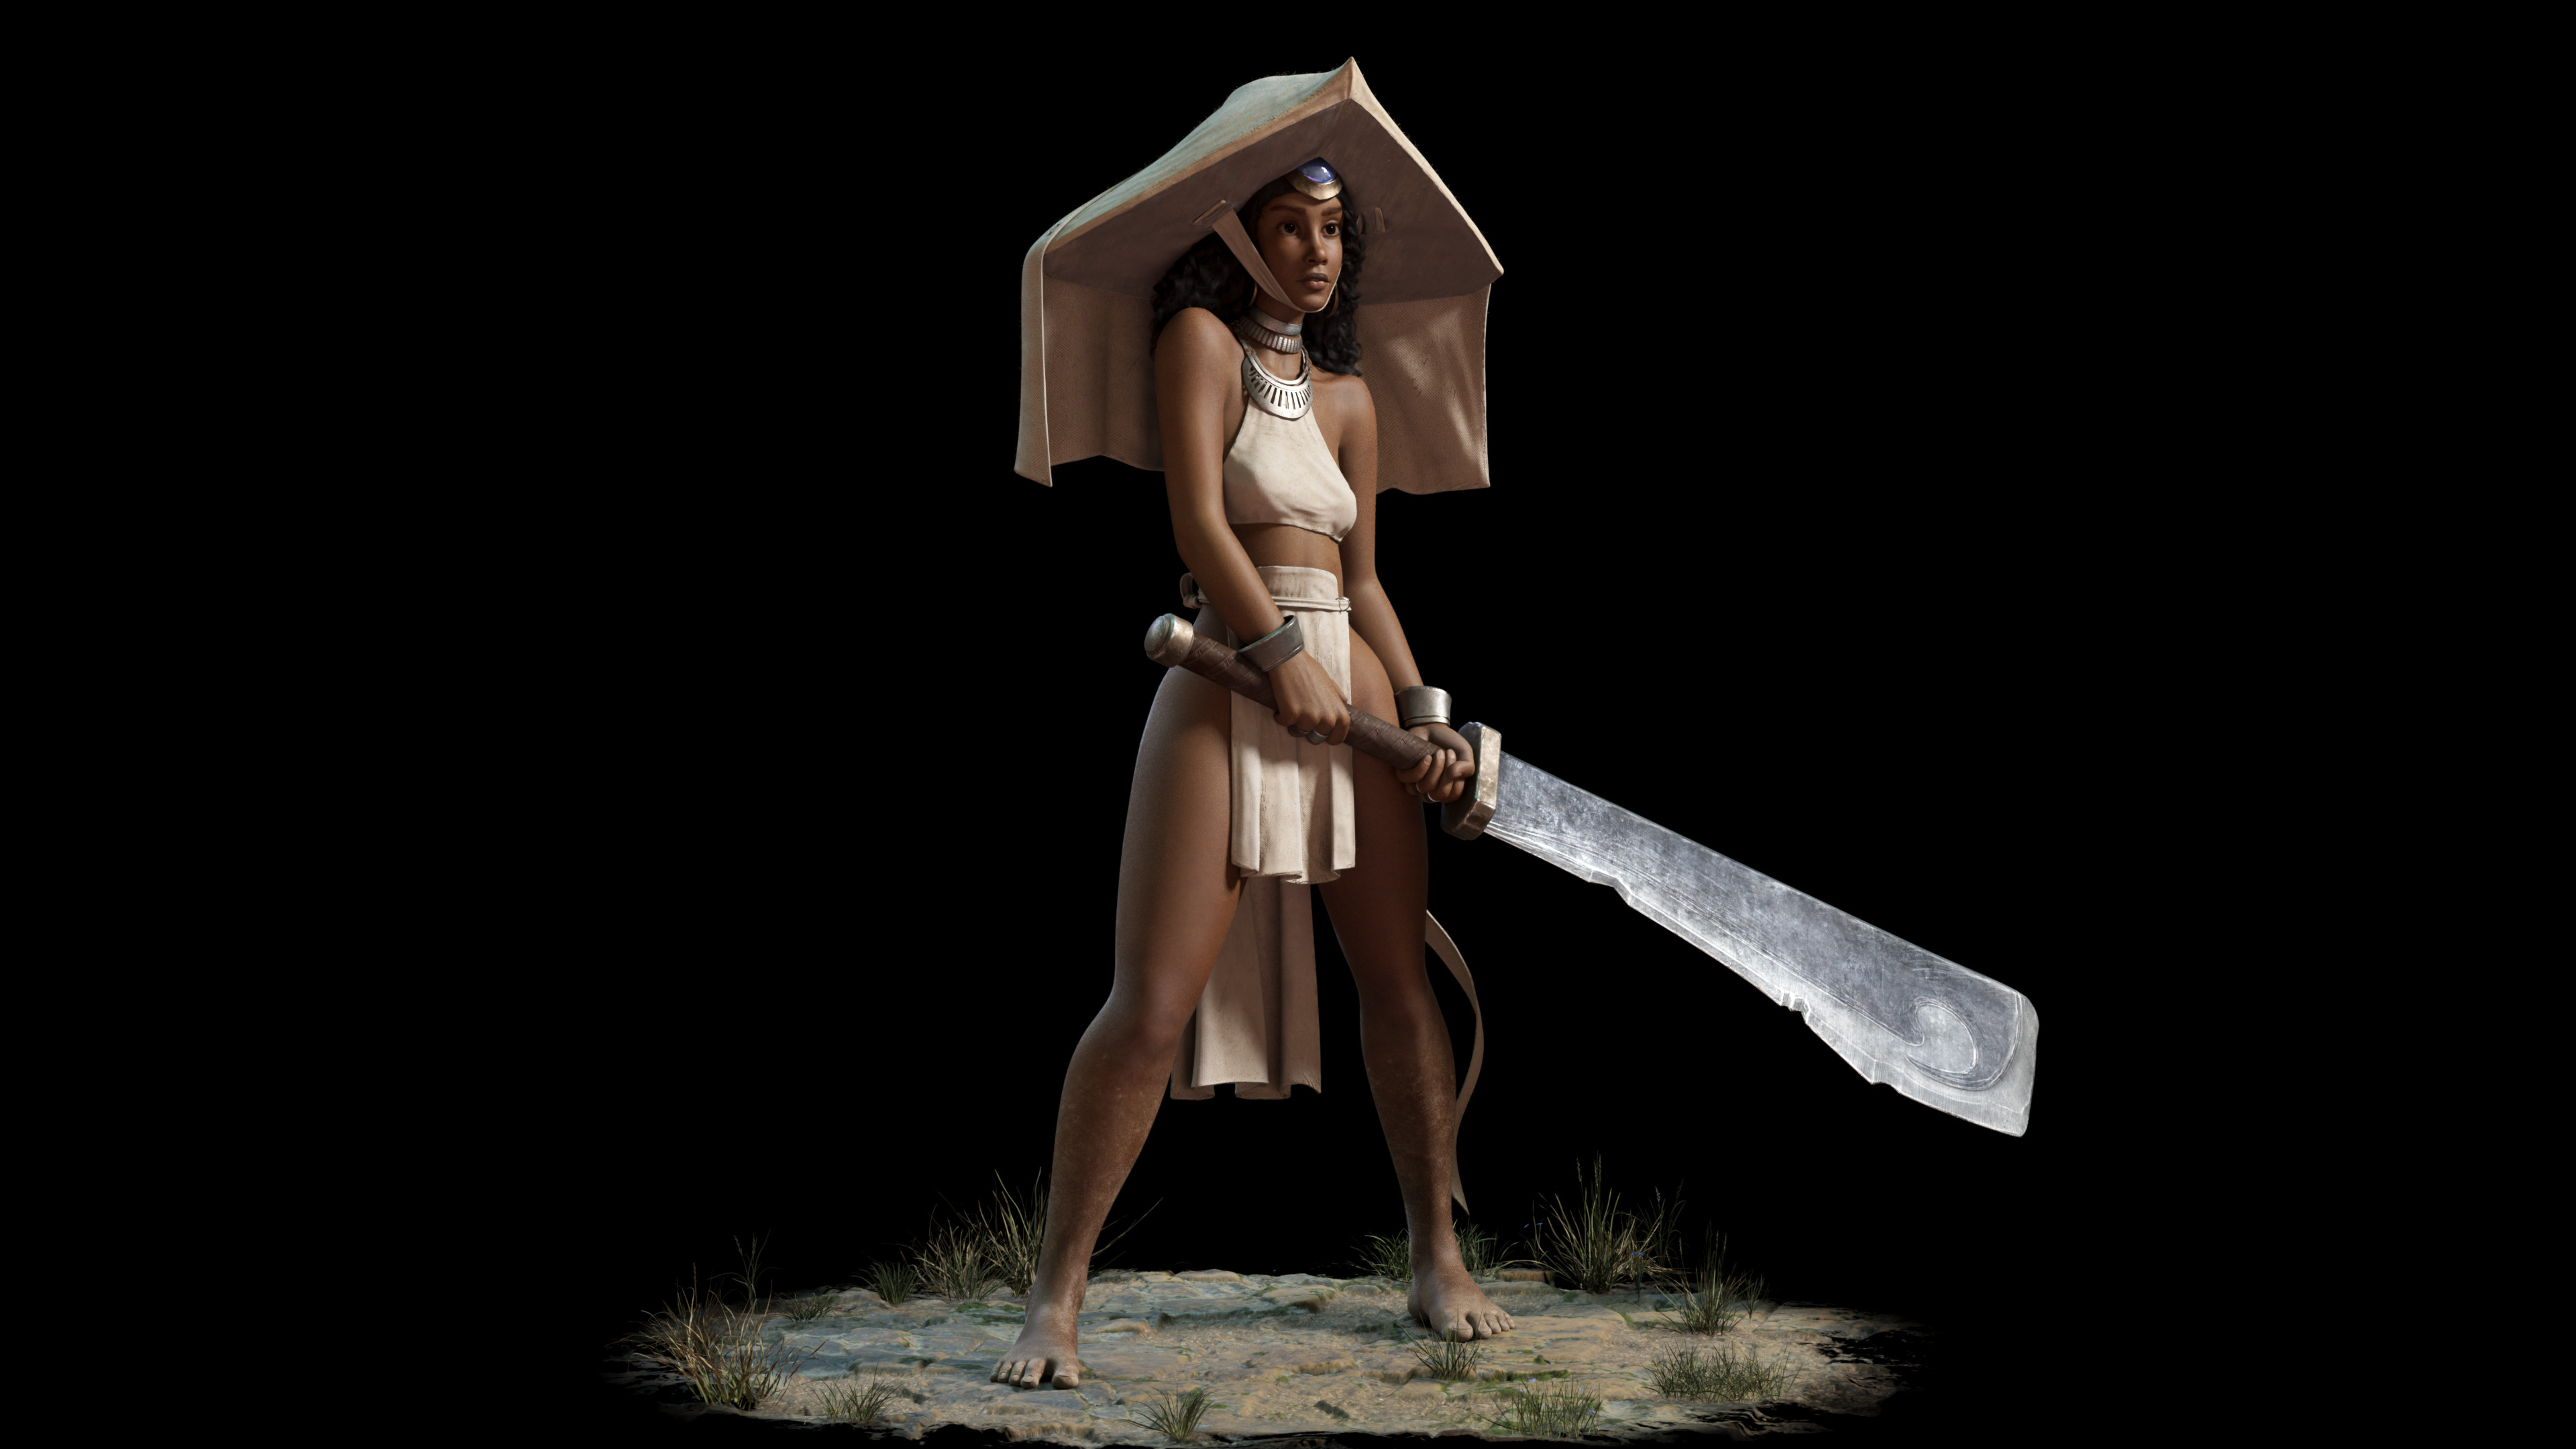 General 3840x2160 Omar Hesham ArtStation women fantasy art fantasy girl women with swords barefoot black background simple background